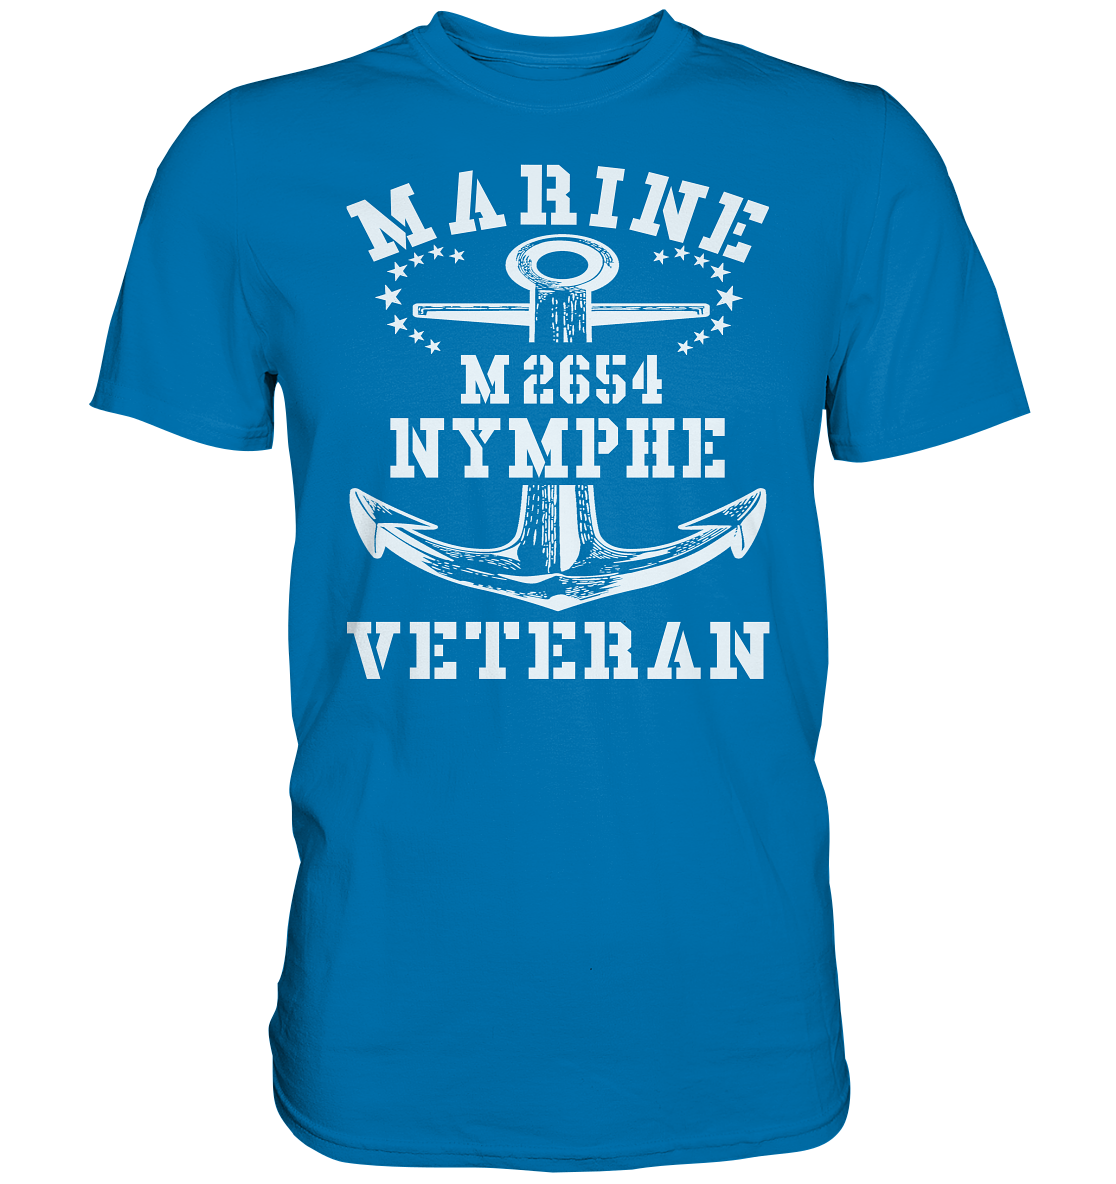 BiMi M2654 NYMPHE Marine Veteran - Premium Shirt